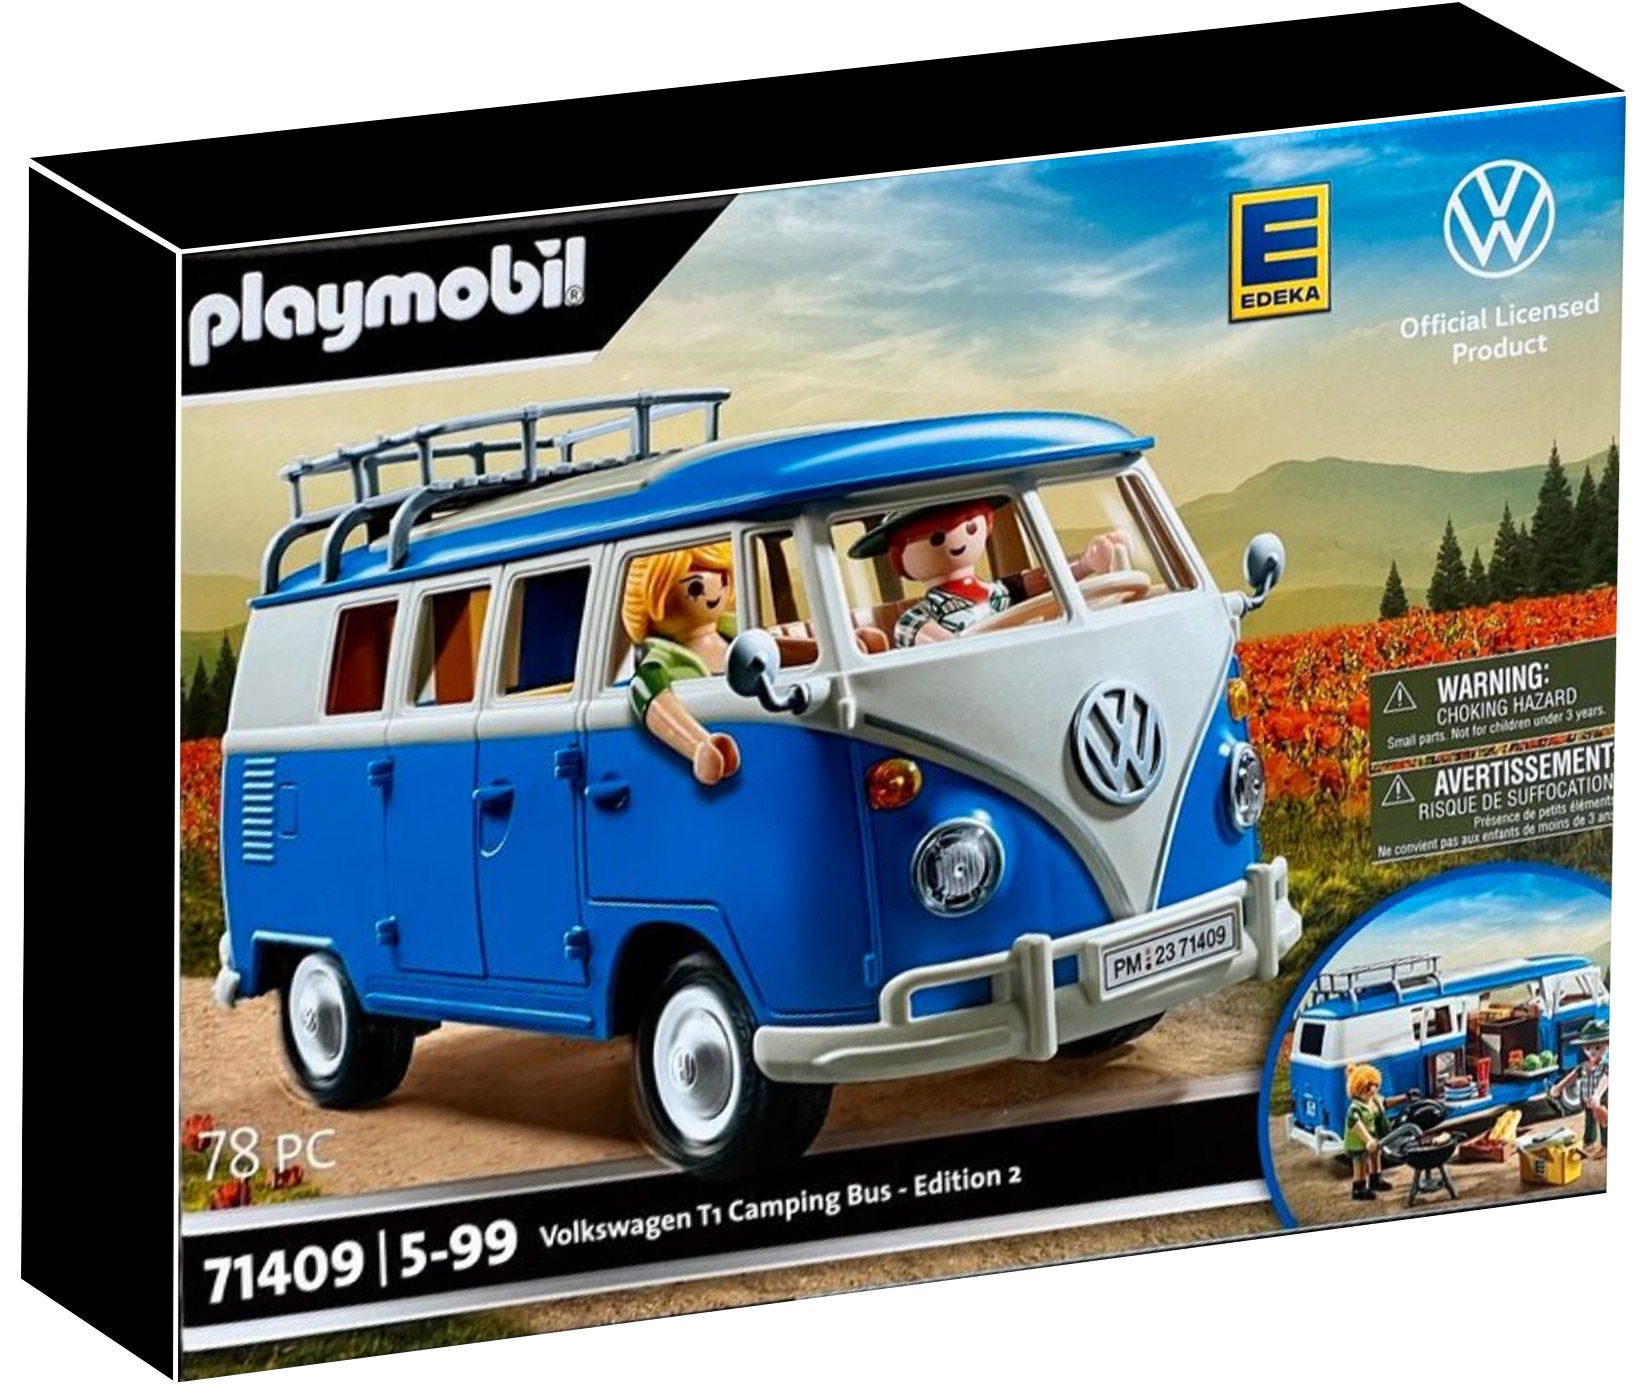 https://www.koupobol.com/img/produits/71409/71409-volkswagen-t1-camping-bus-bleu-edition-2-edition-speciale-edeka-1-1693388160.jpg